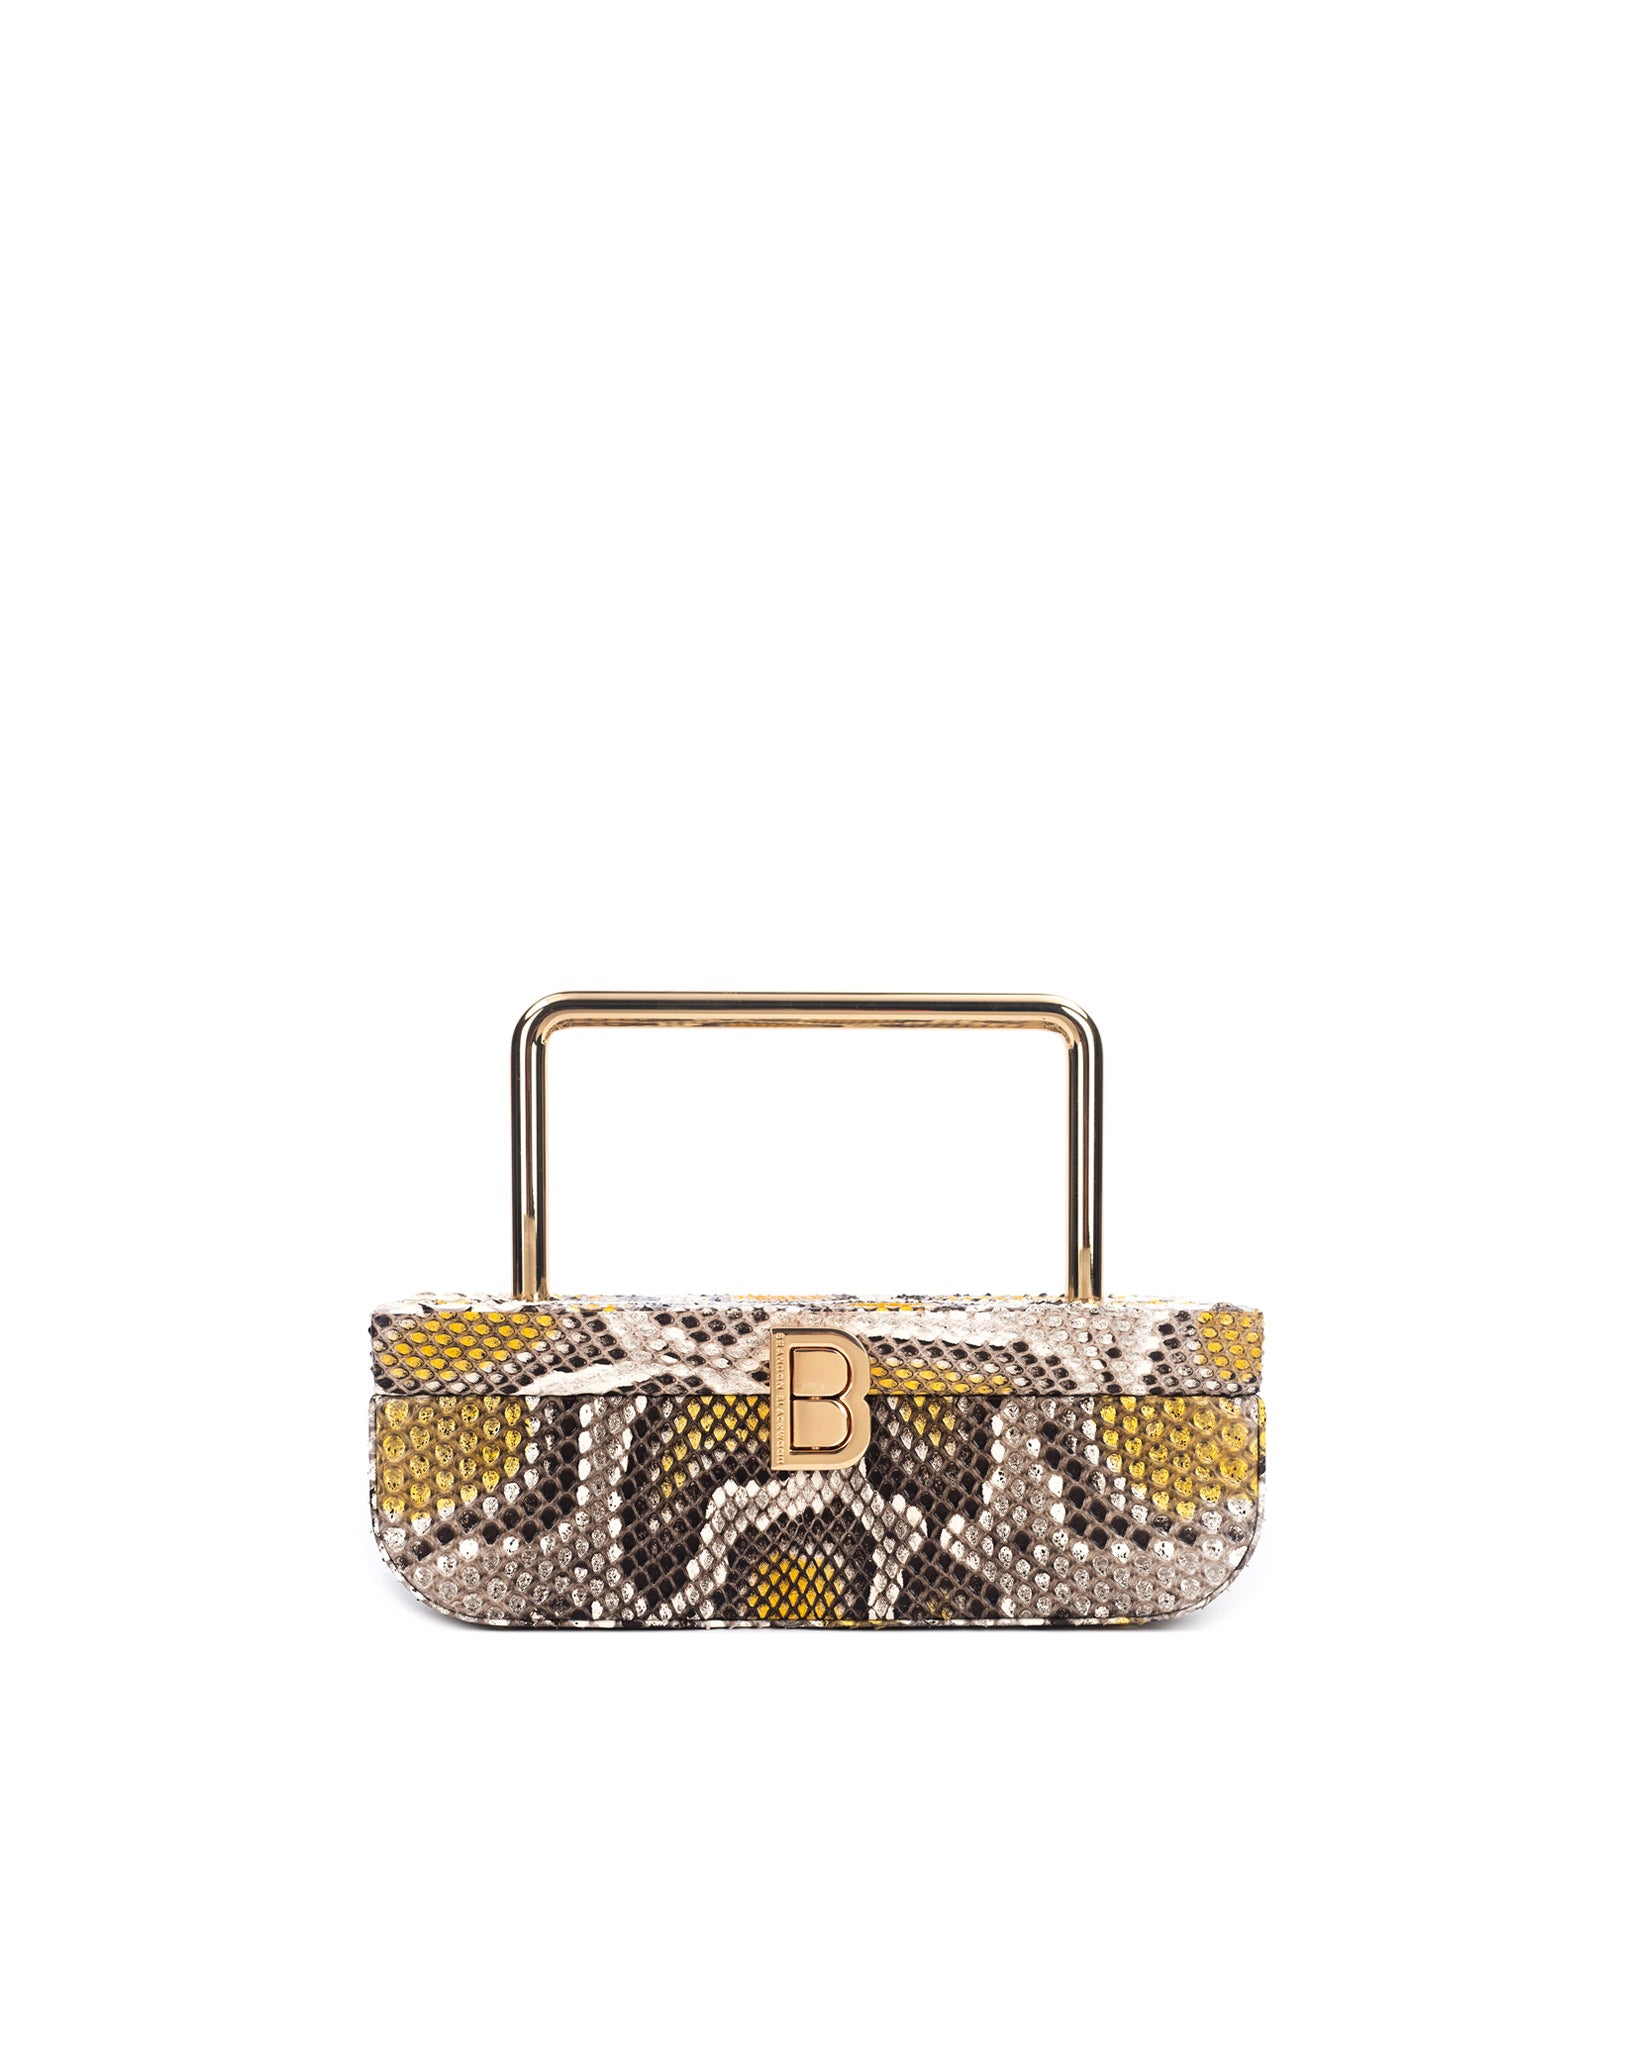 Red Leopard Ponyhair Kuei Bag | Luxury Designer Bags | Brandon Blackwood